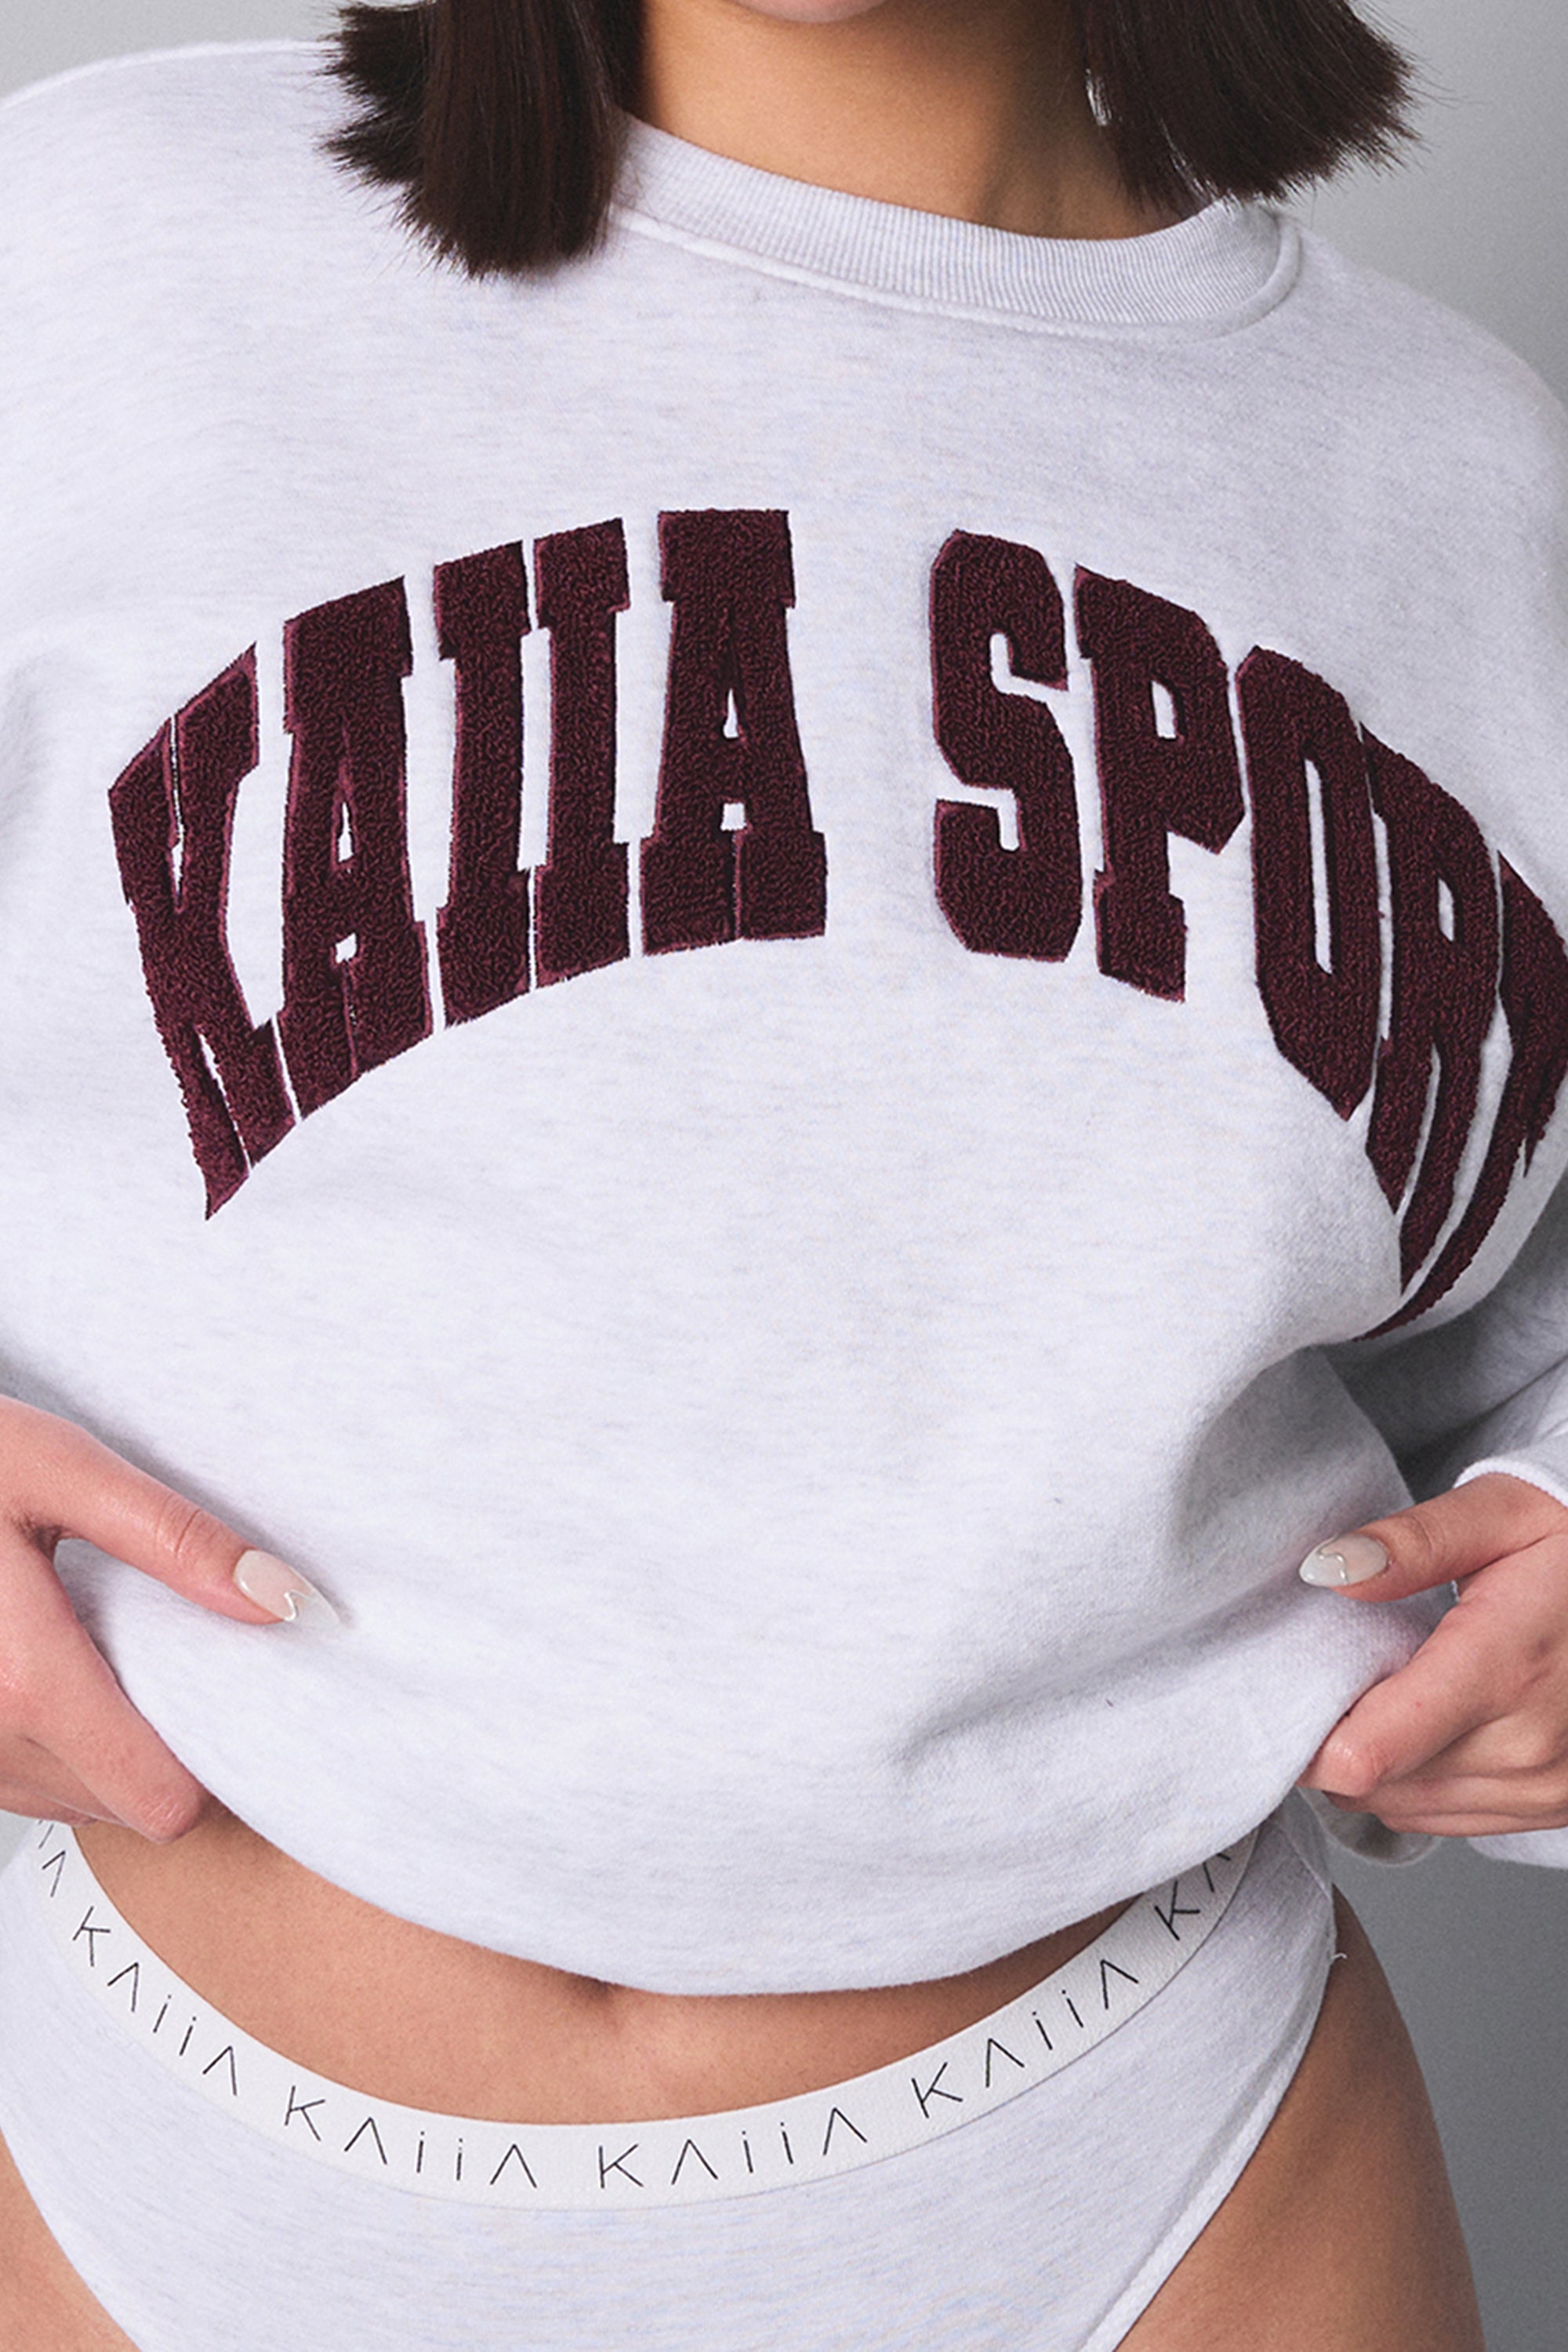 Kaiia Sport Slogan Oversized Sweatshirt Light Grey Marl